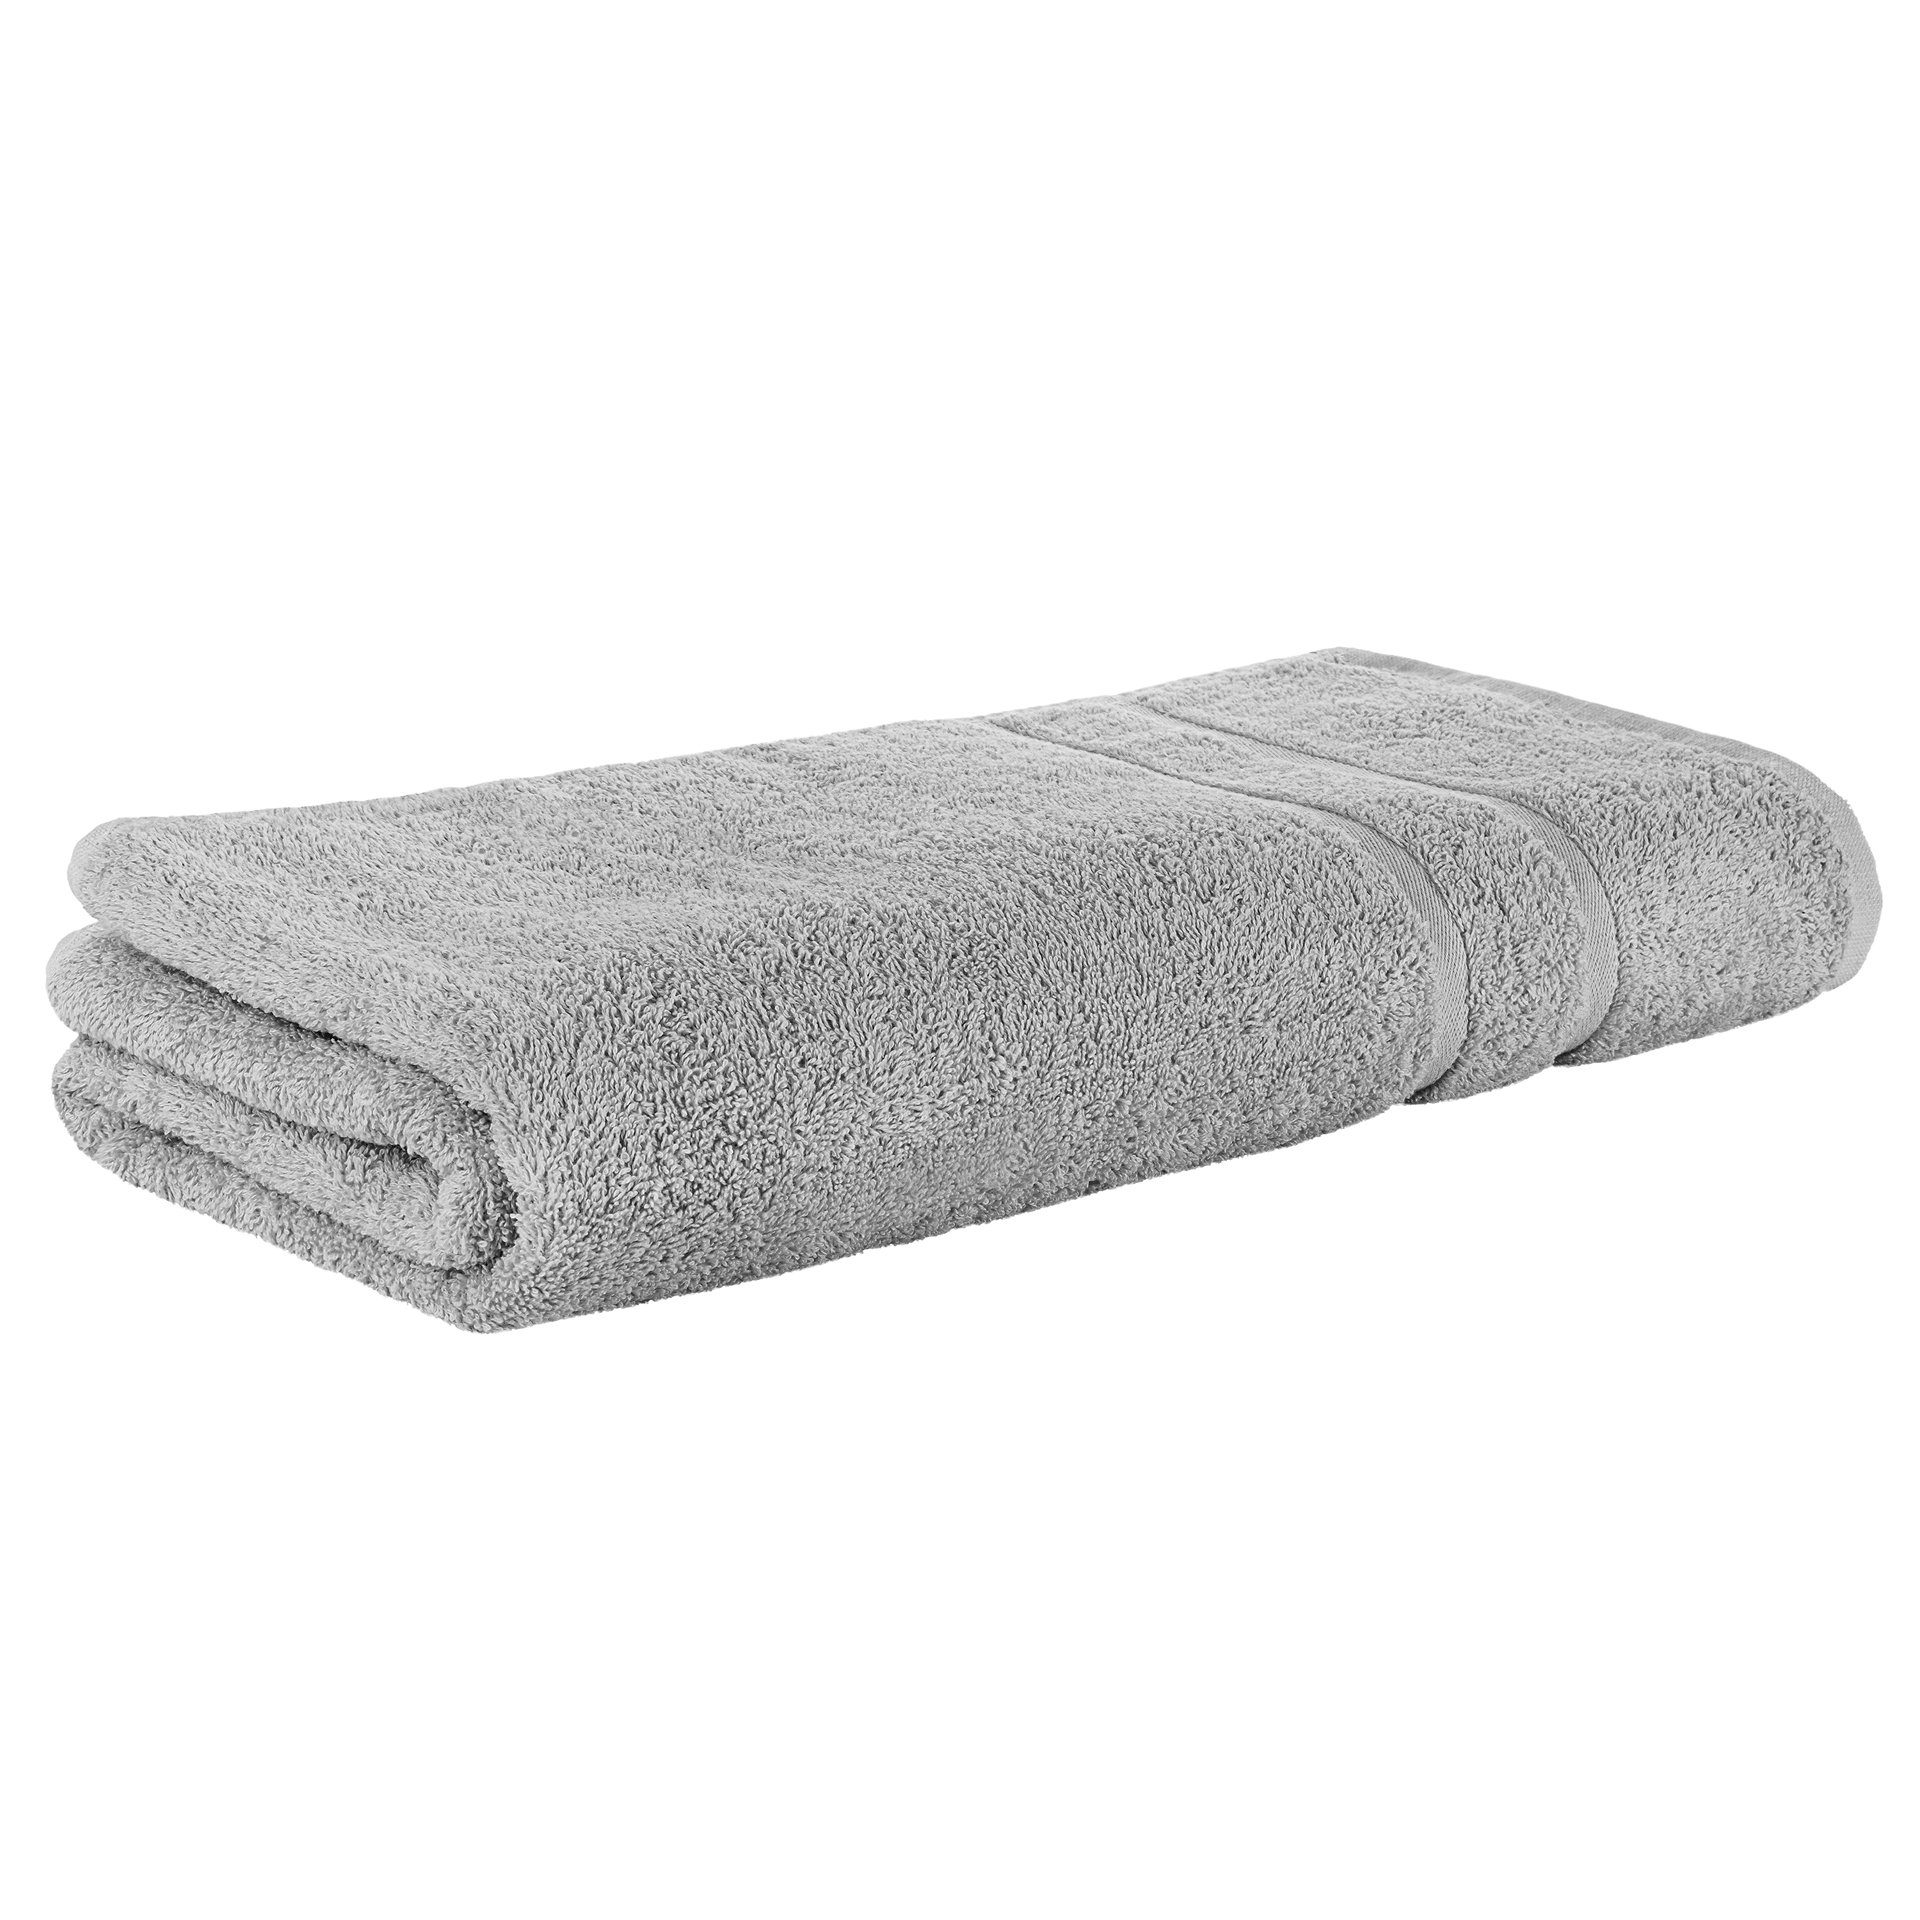 StickandShine Handtuch Handtücher Badetücher Saunatücher Baumwolle Duschtücher Wahl 100% GSM Gästehandtücher 500 in zur Hellgrau